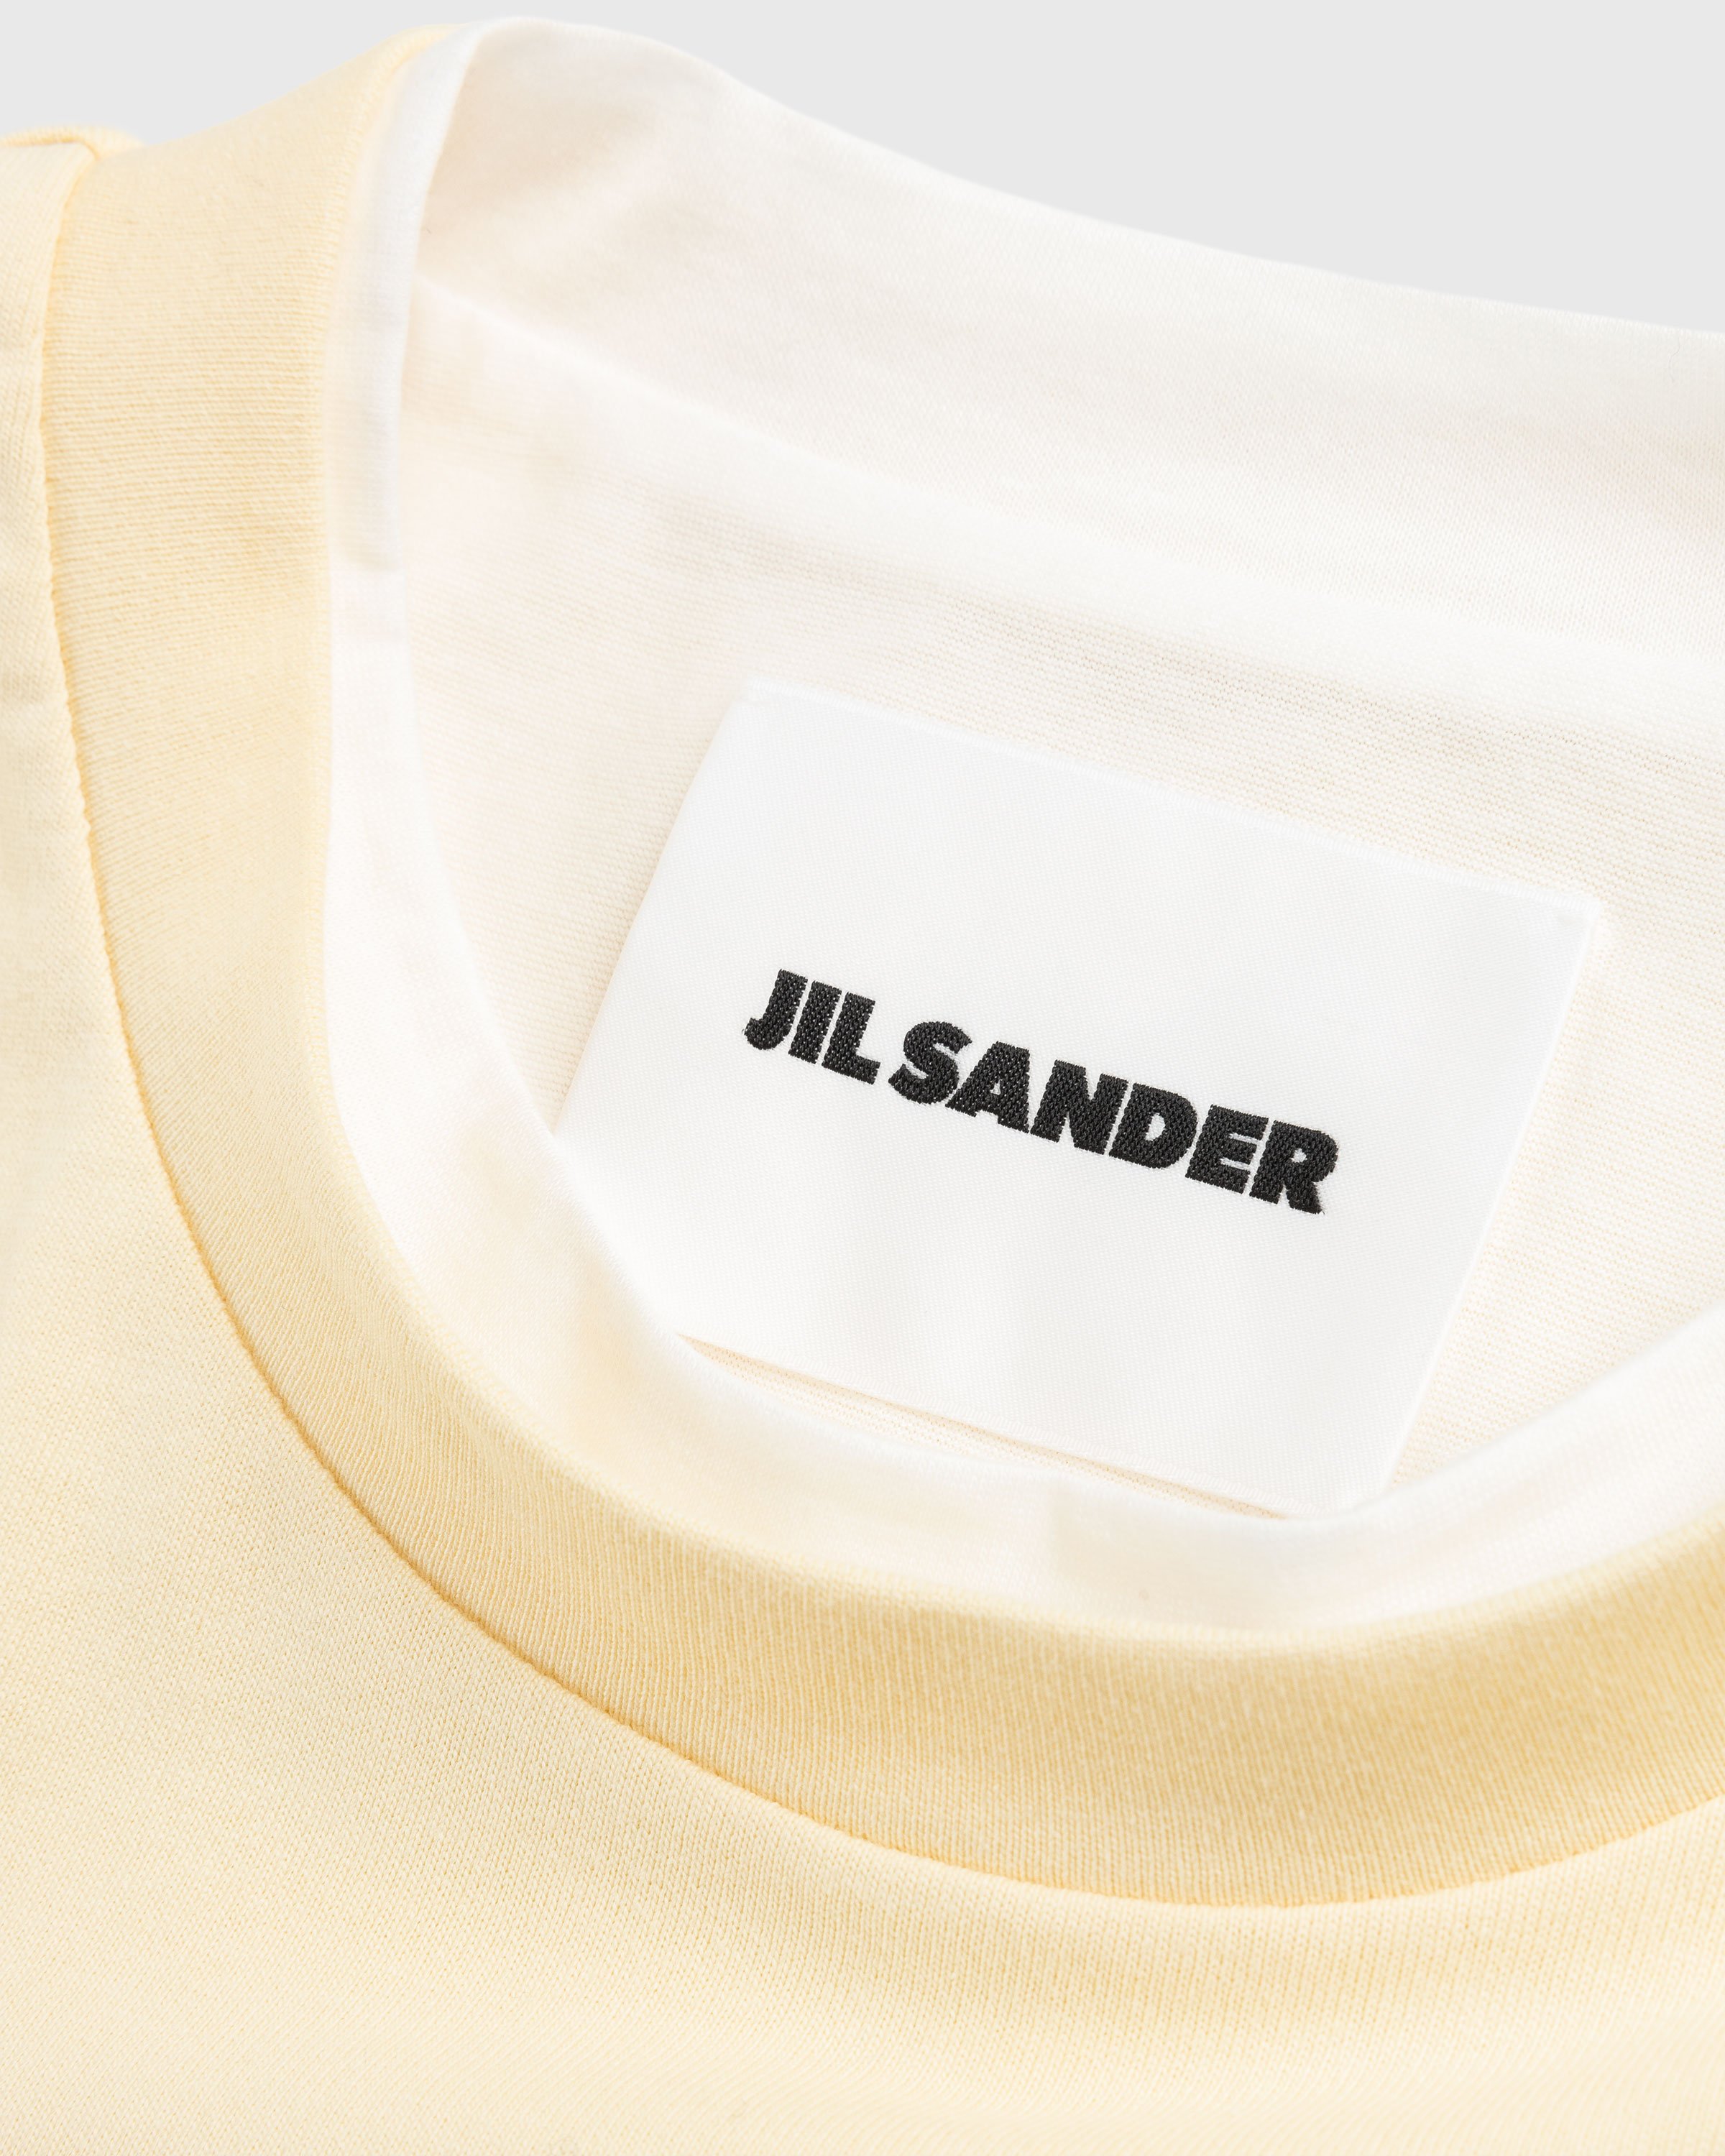 Jil Sander - Looking For Miracles T-Shirt Bone - Clothing - White - Image 5